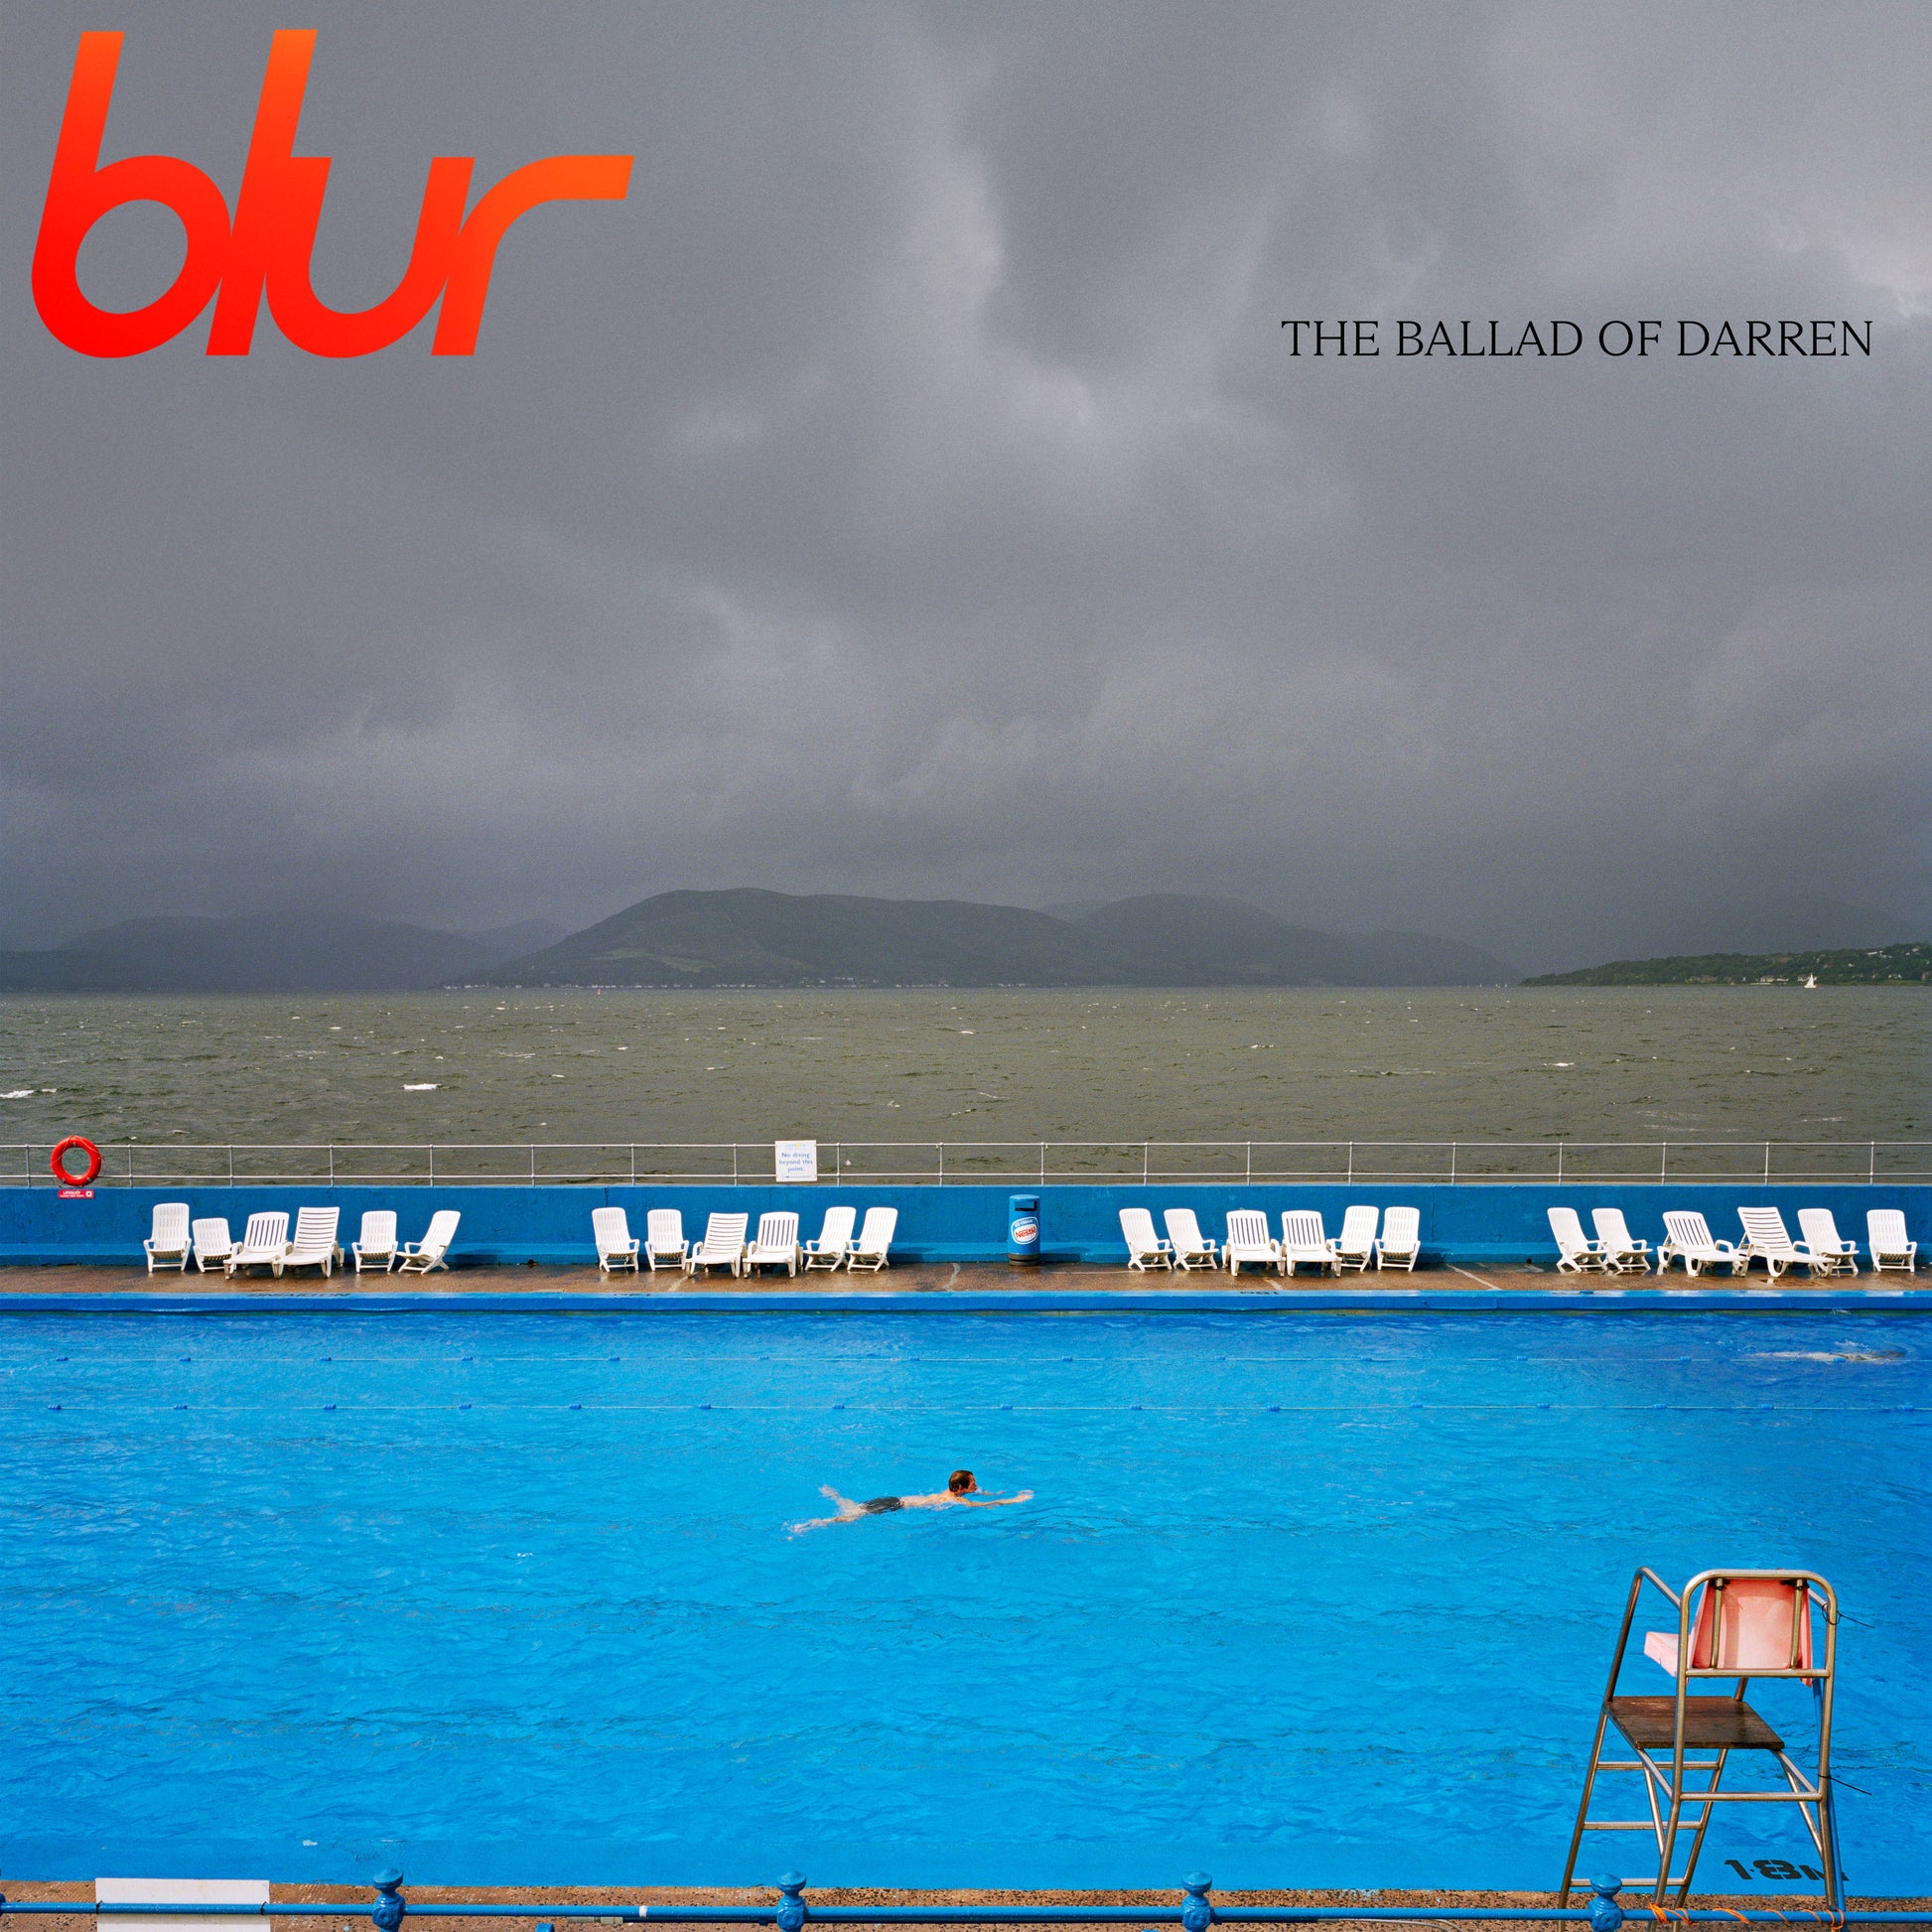 Blur The Ballad of Darren - Ireland Vinyl